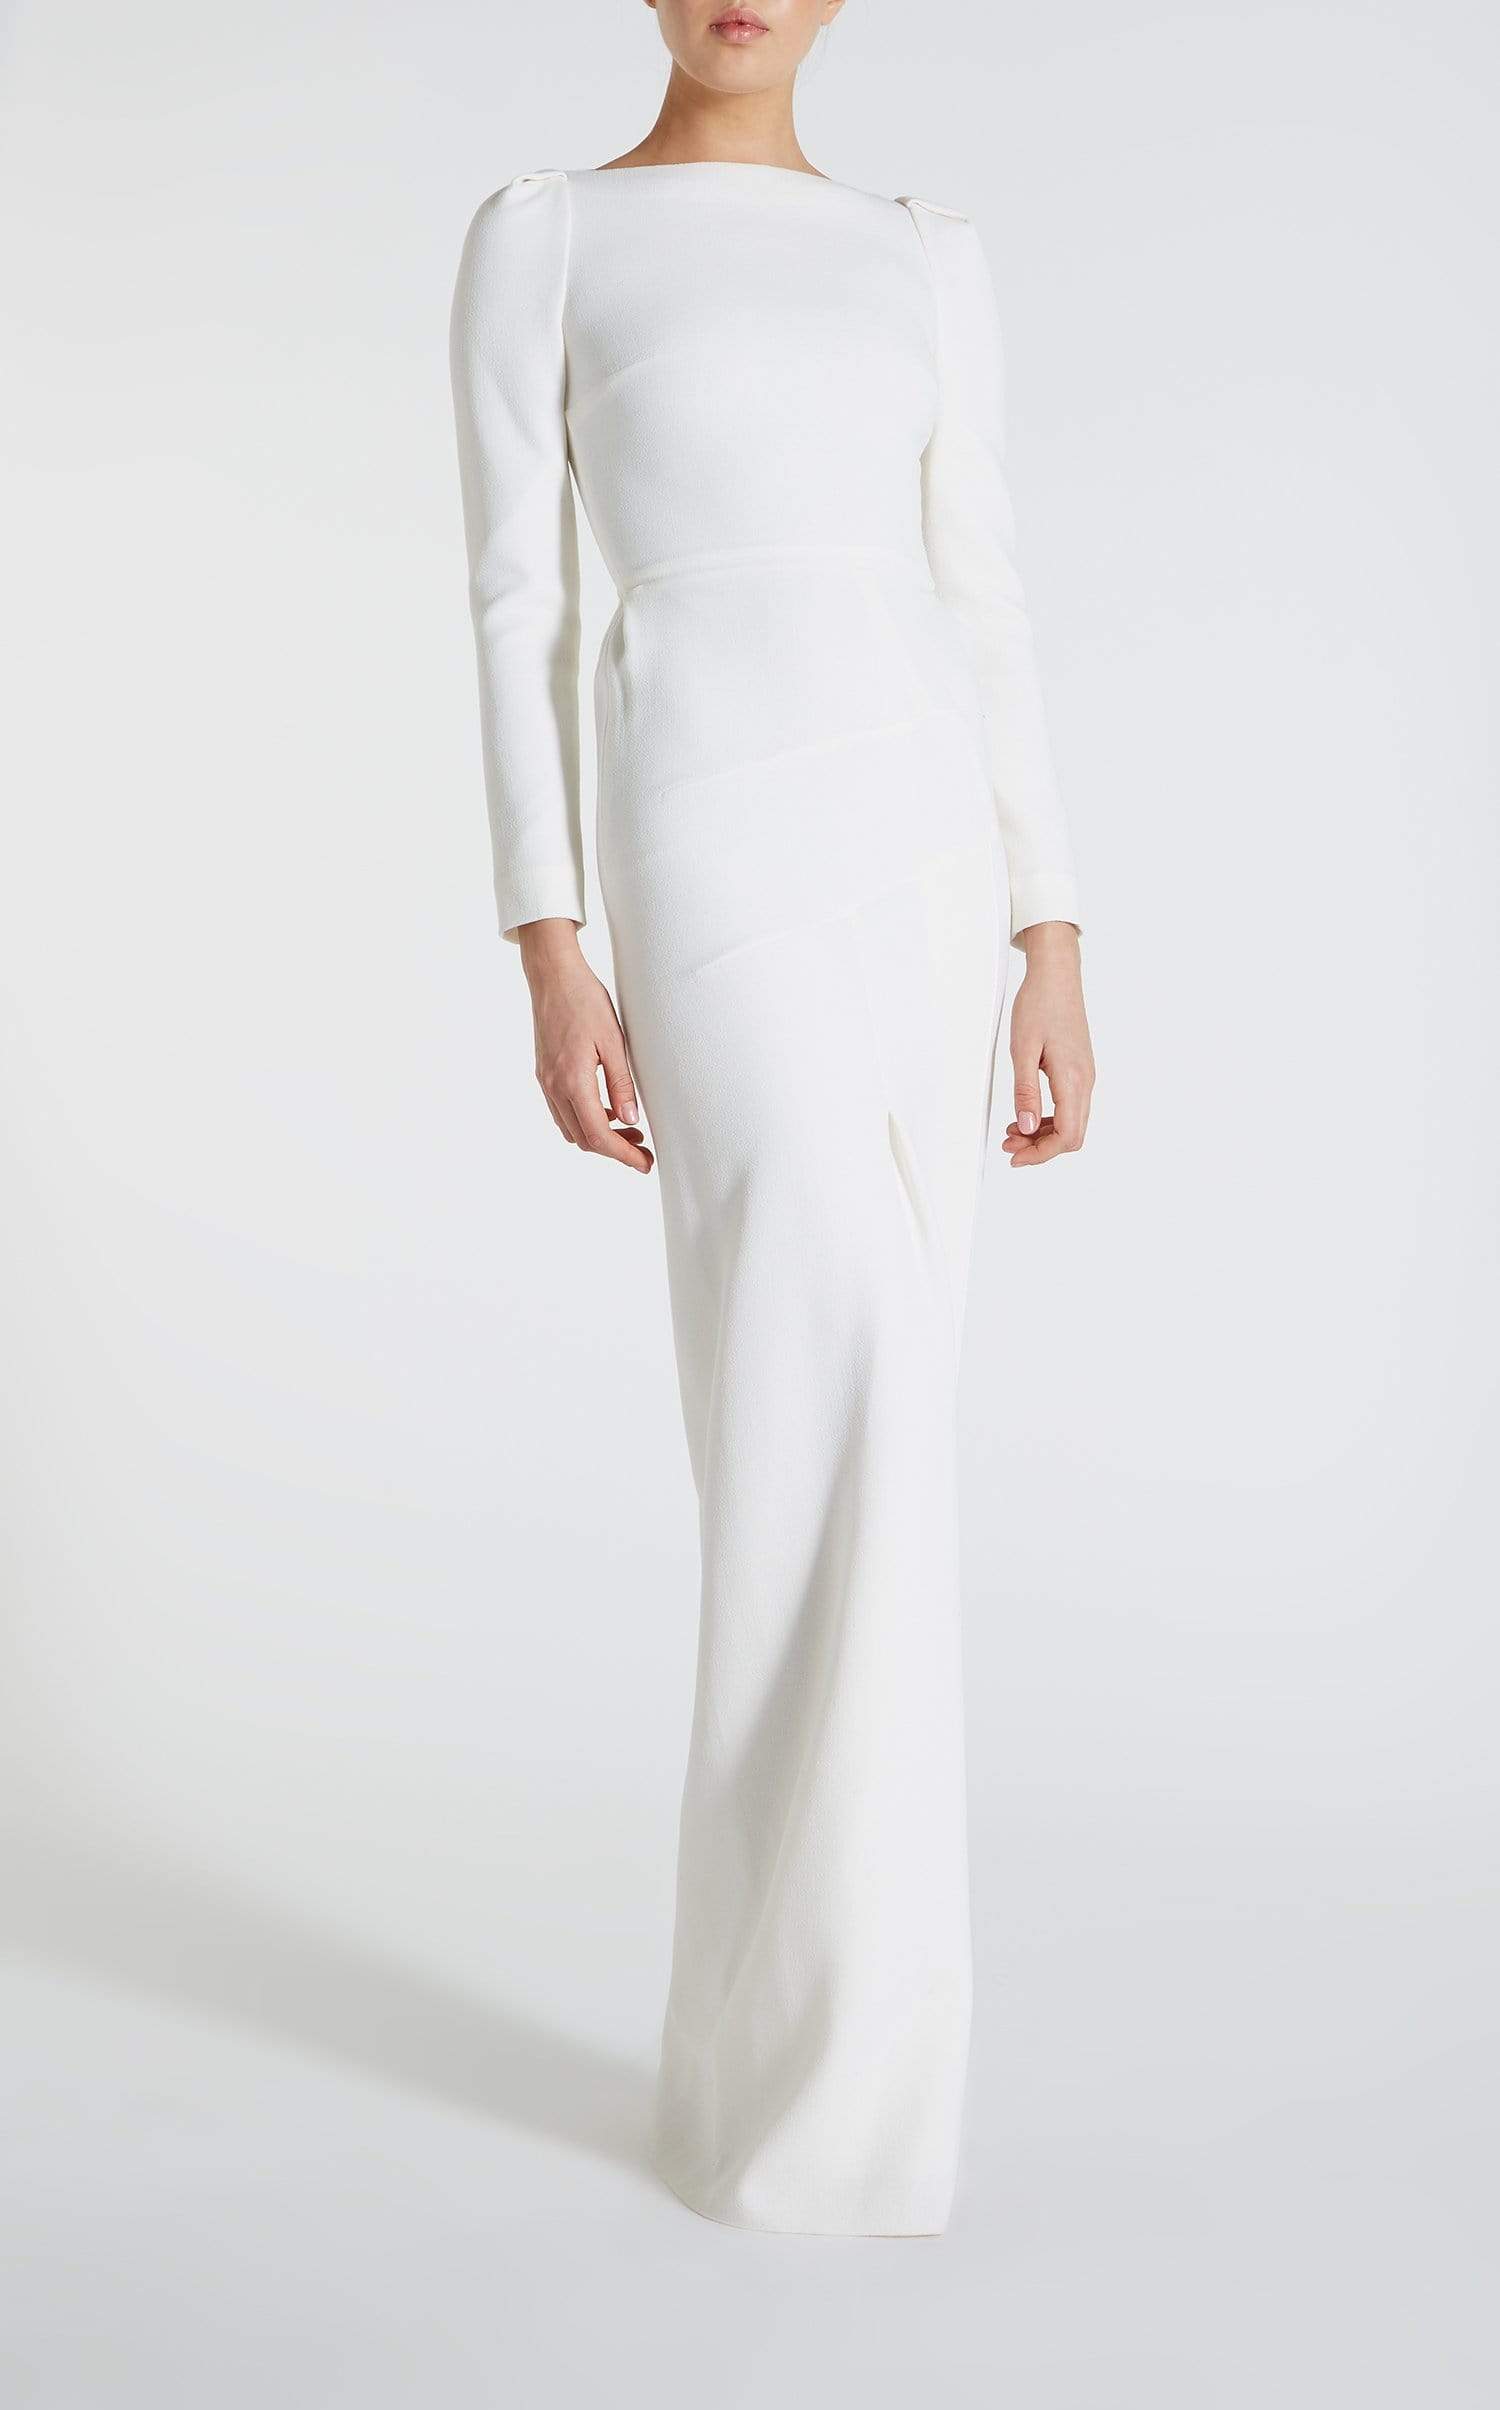 roland mouret white dress